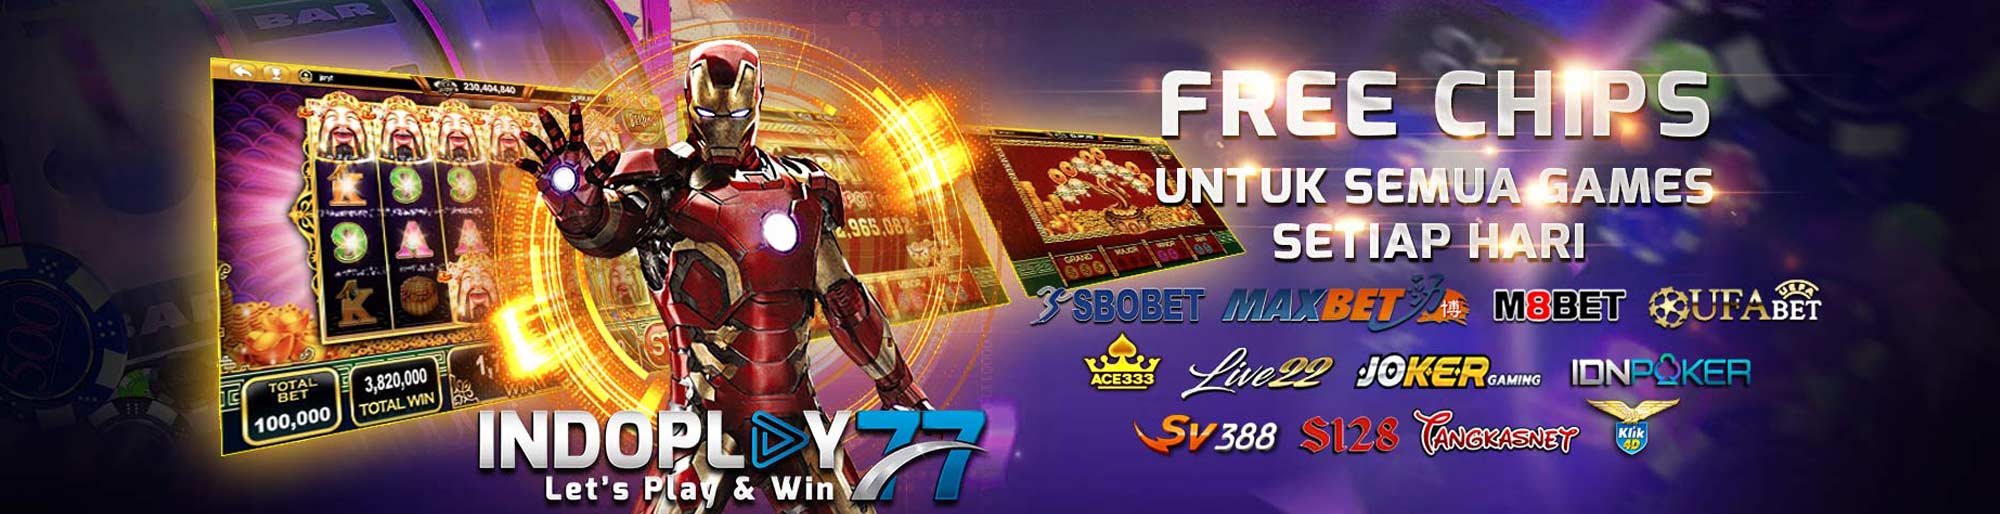 promo freebet situs judi game slot online live22 indonesia